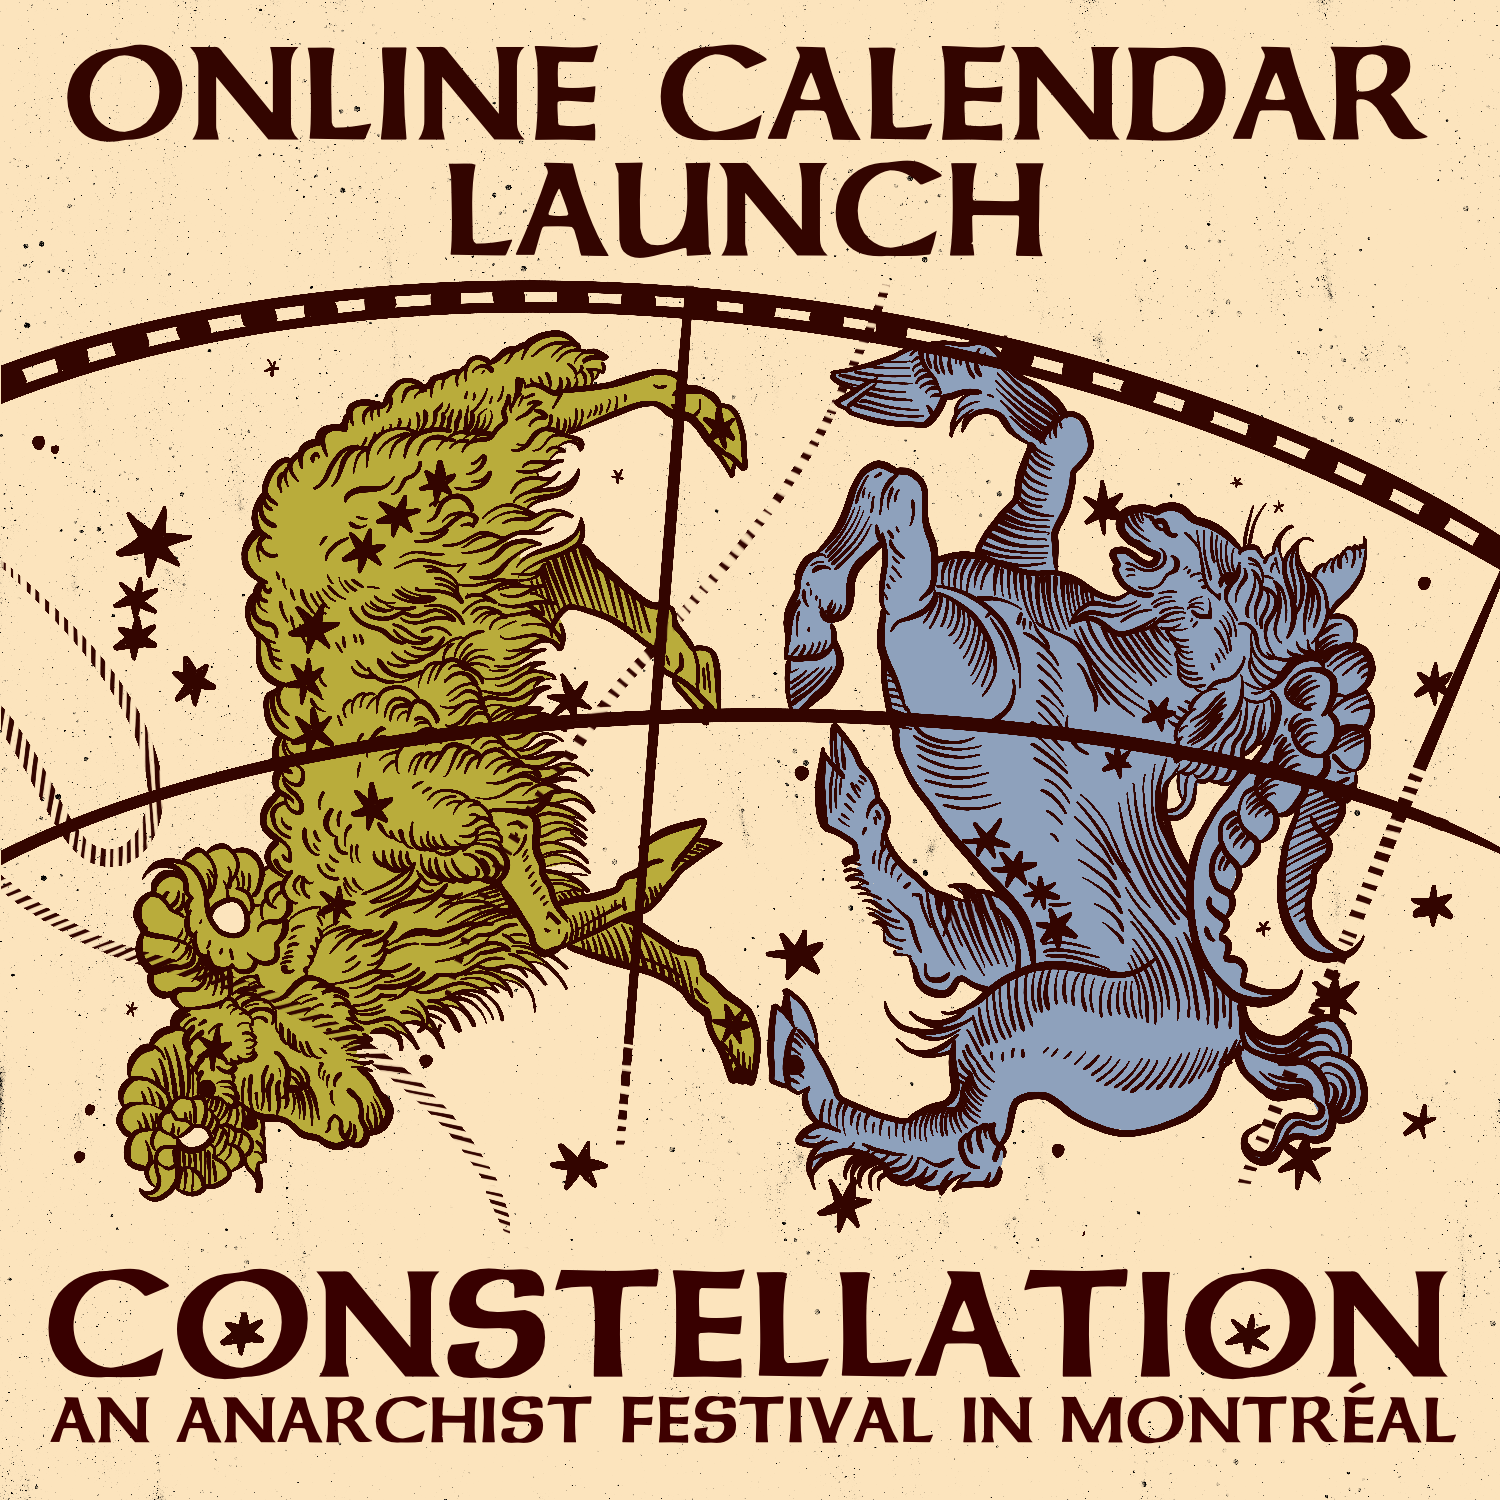 Online Calendar Launch - CONSTELLATION: An Anarchist Festival in Montréal